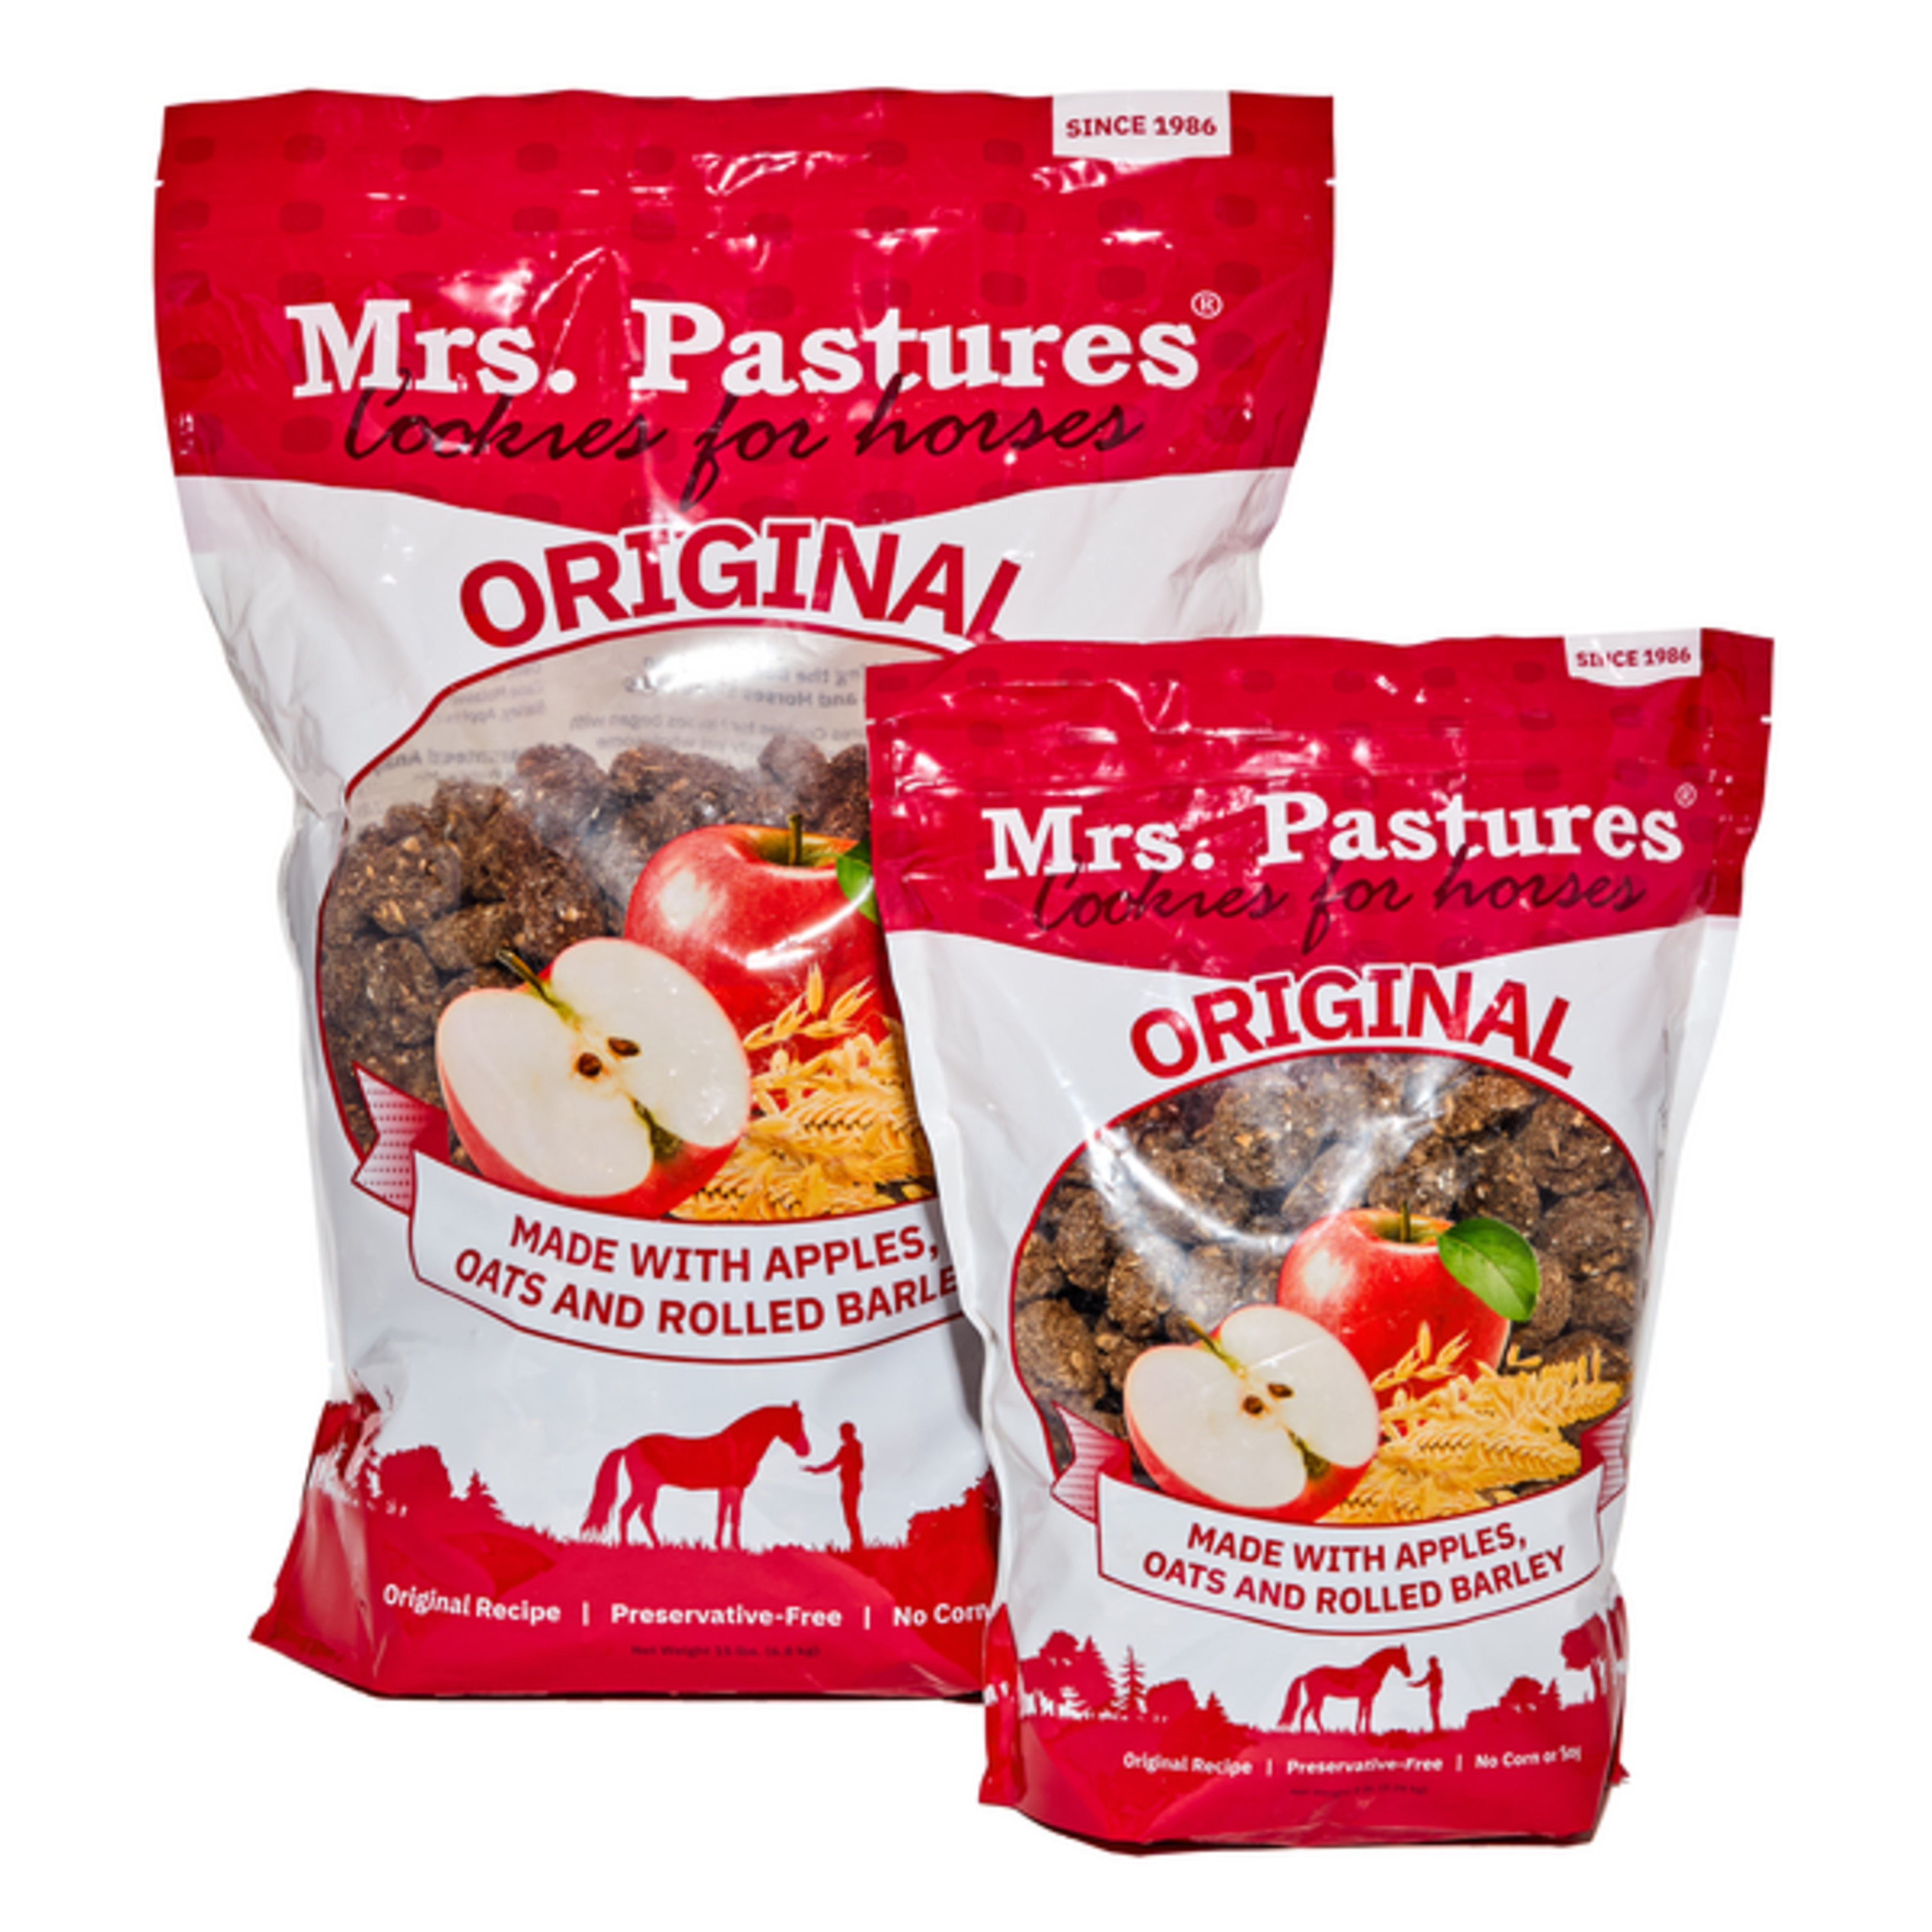 Mrs Pastures Original Cookie 5 lb refill pouch